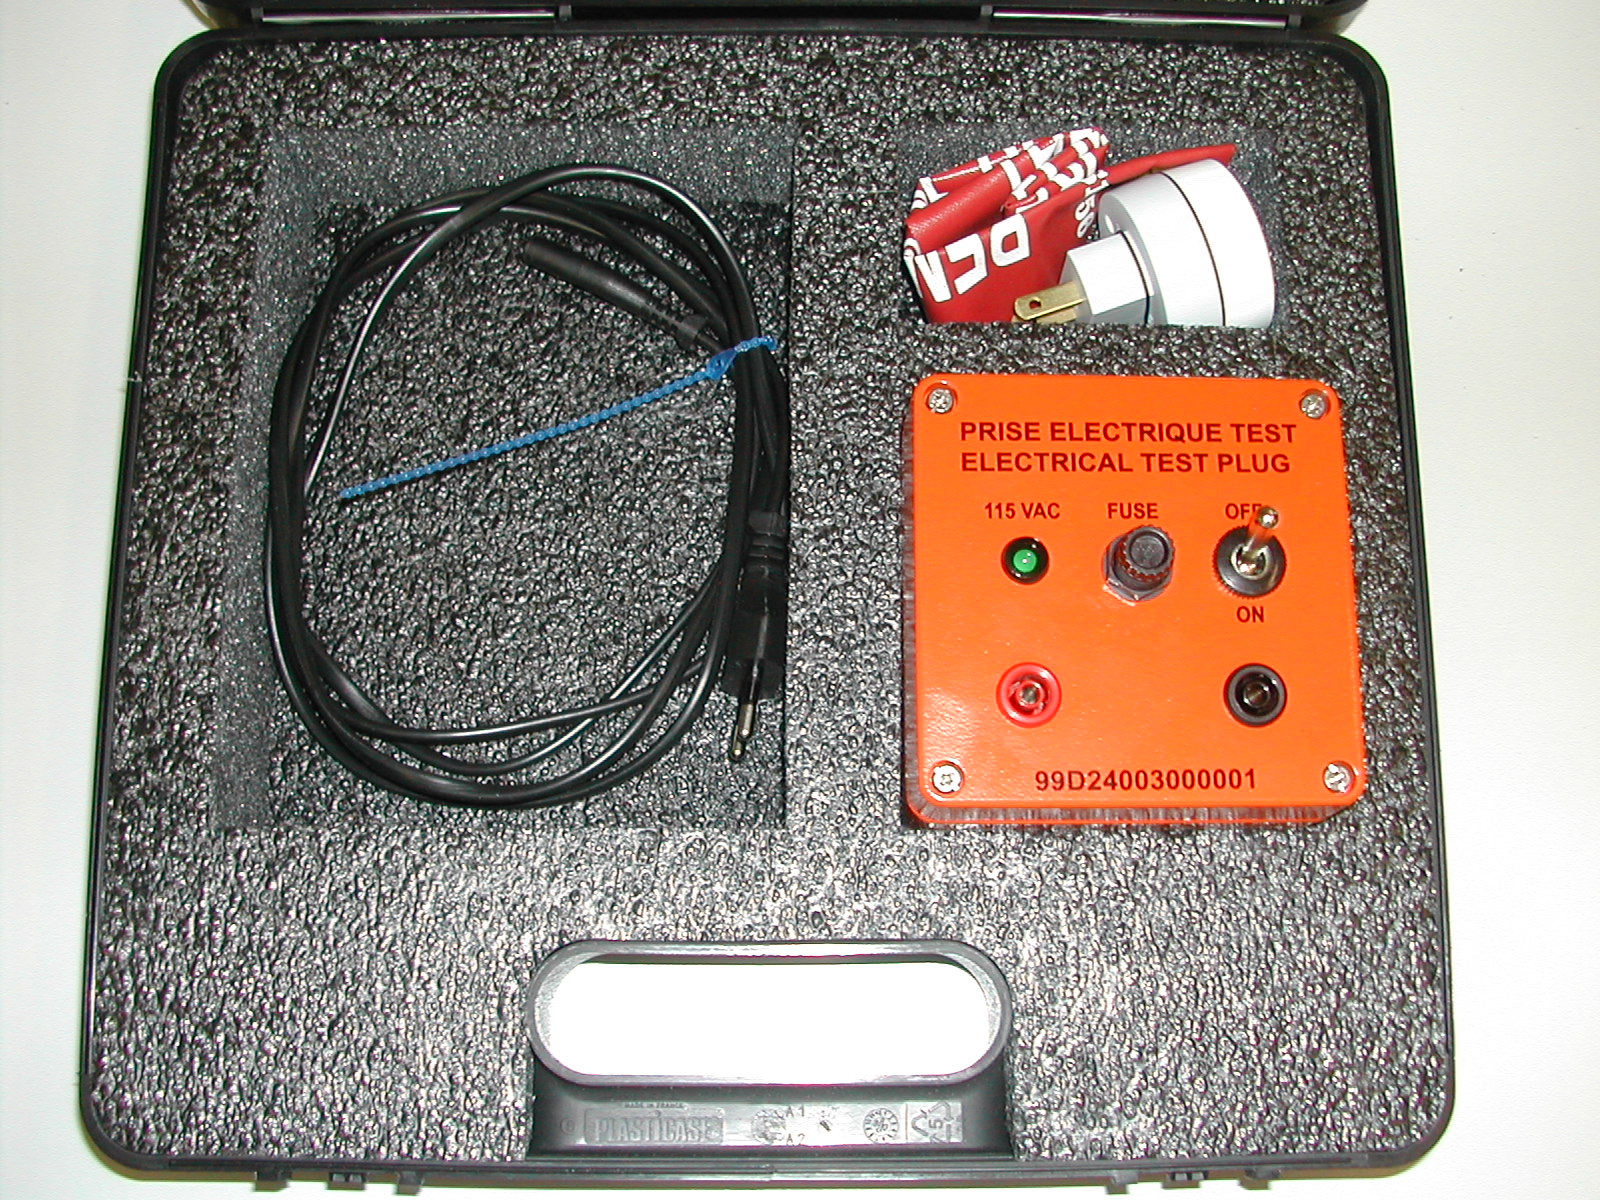 99D24003000001 : Electrical test plug